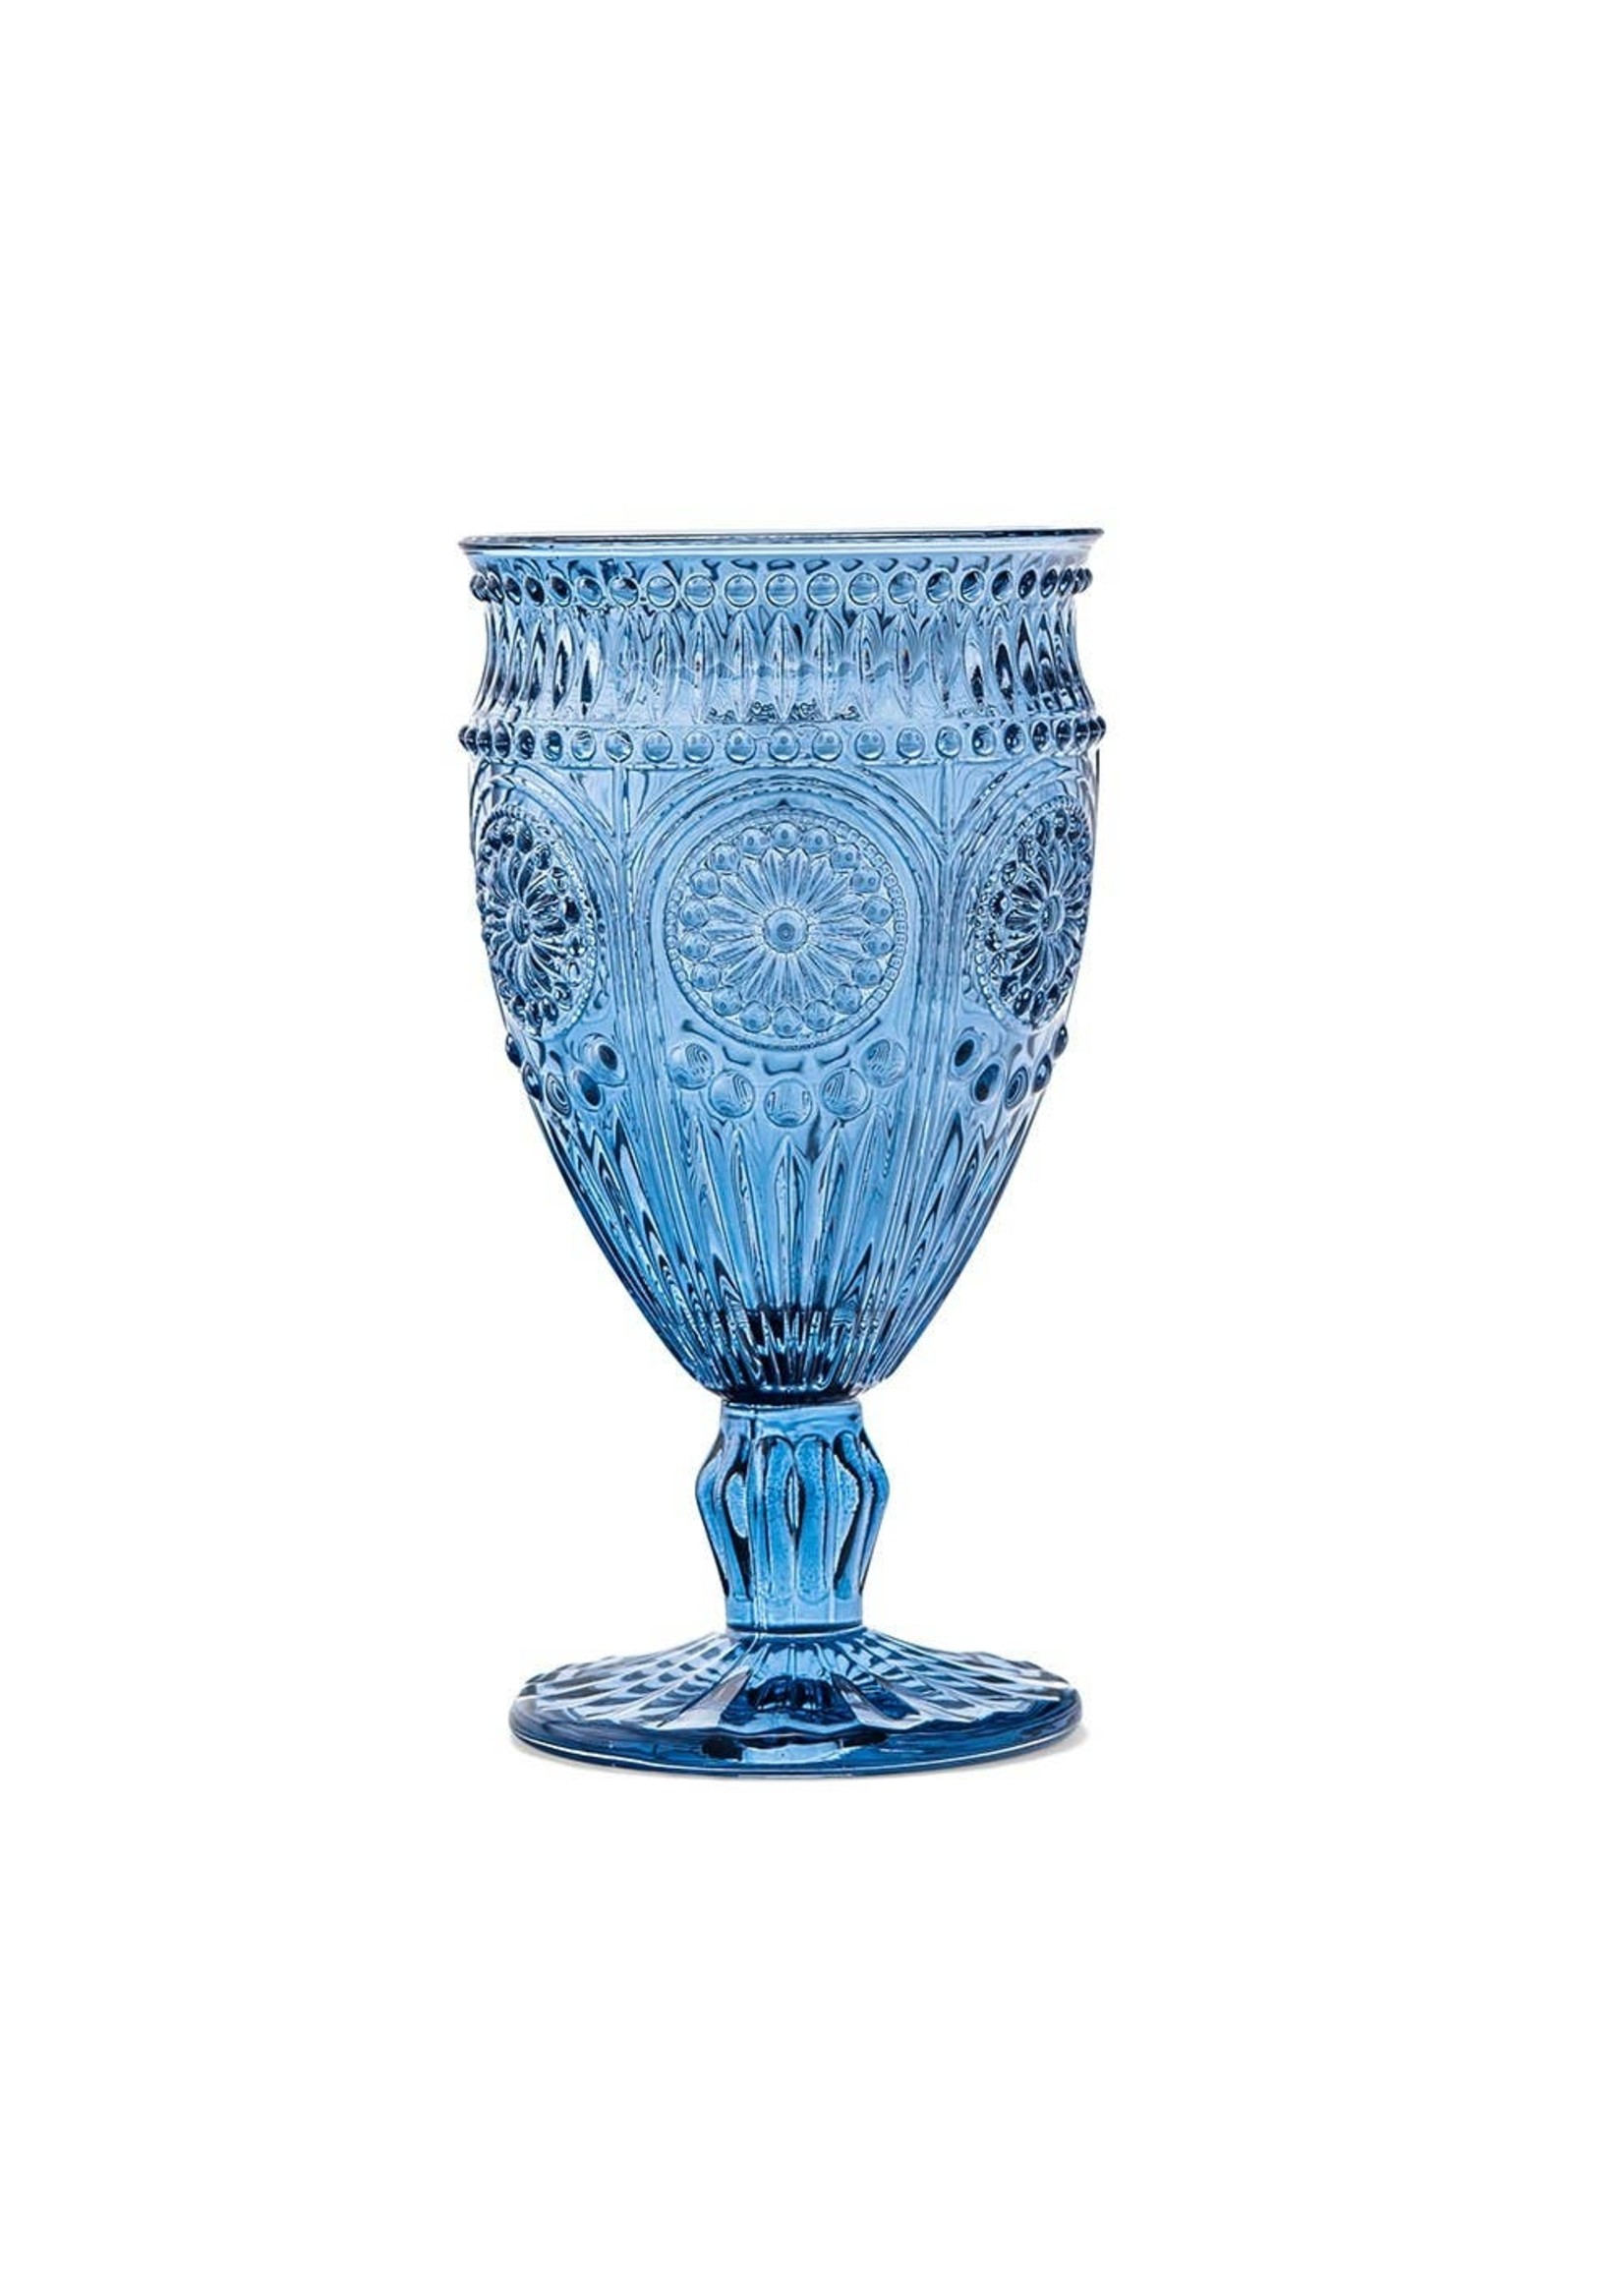 Vintage style pressed glass wine goblet blue